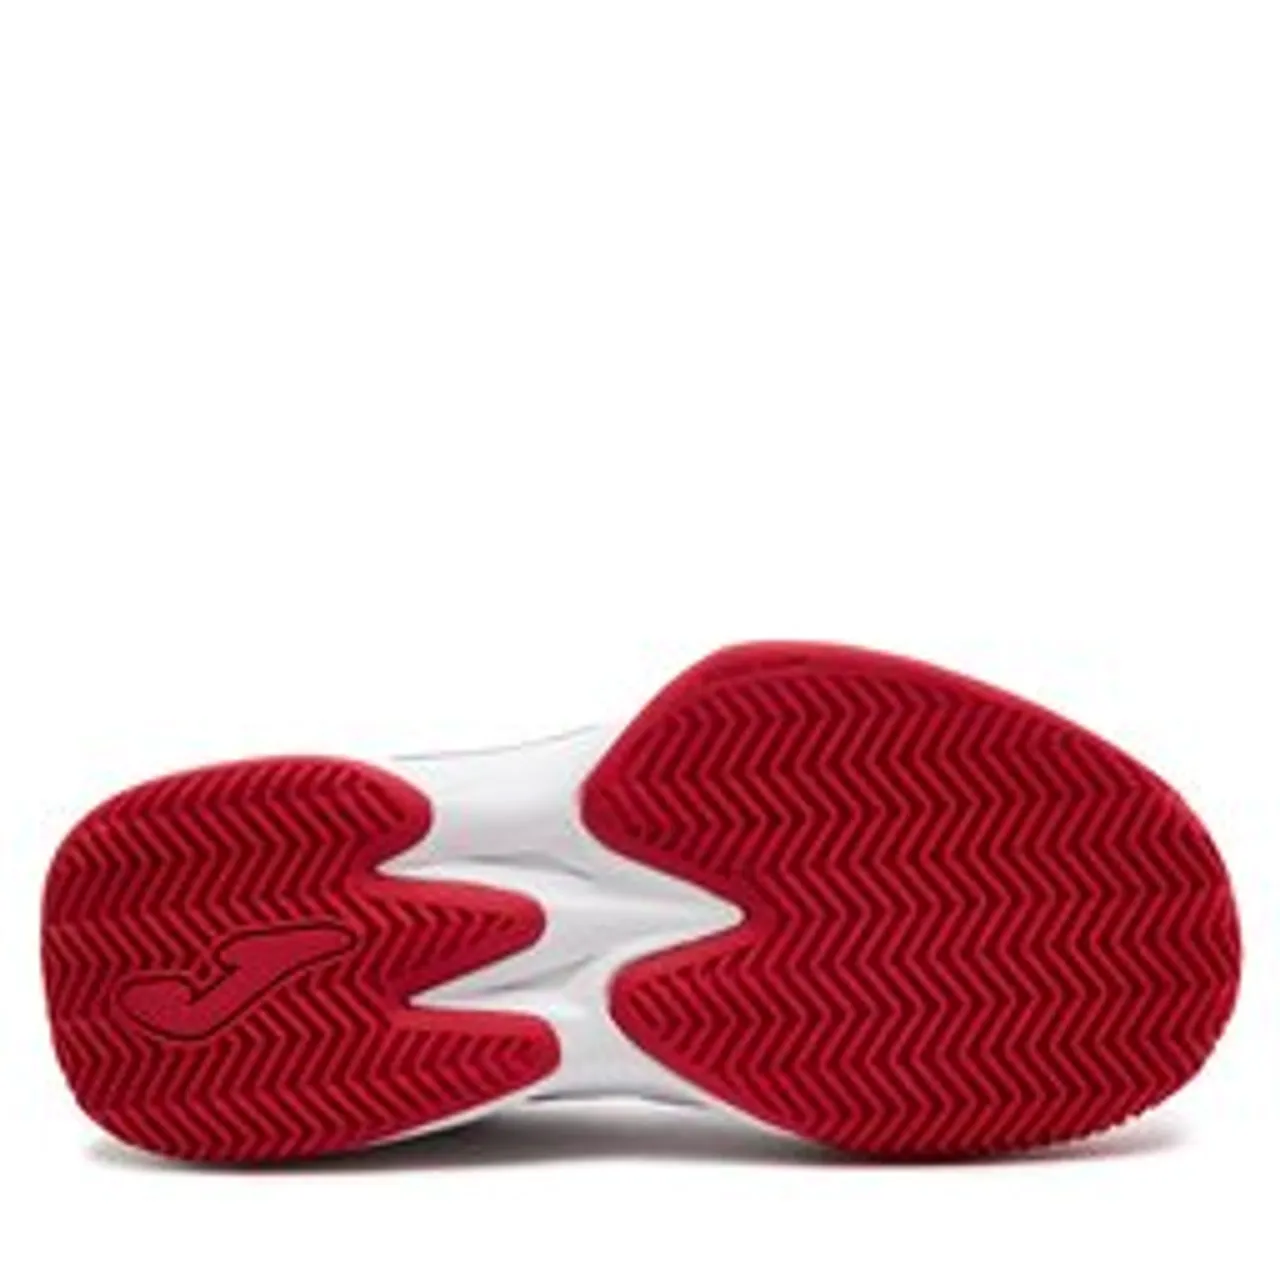 Schuhe Joma Master 1000 Jr 2302 JMATW2302C White Red